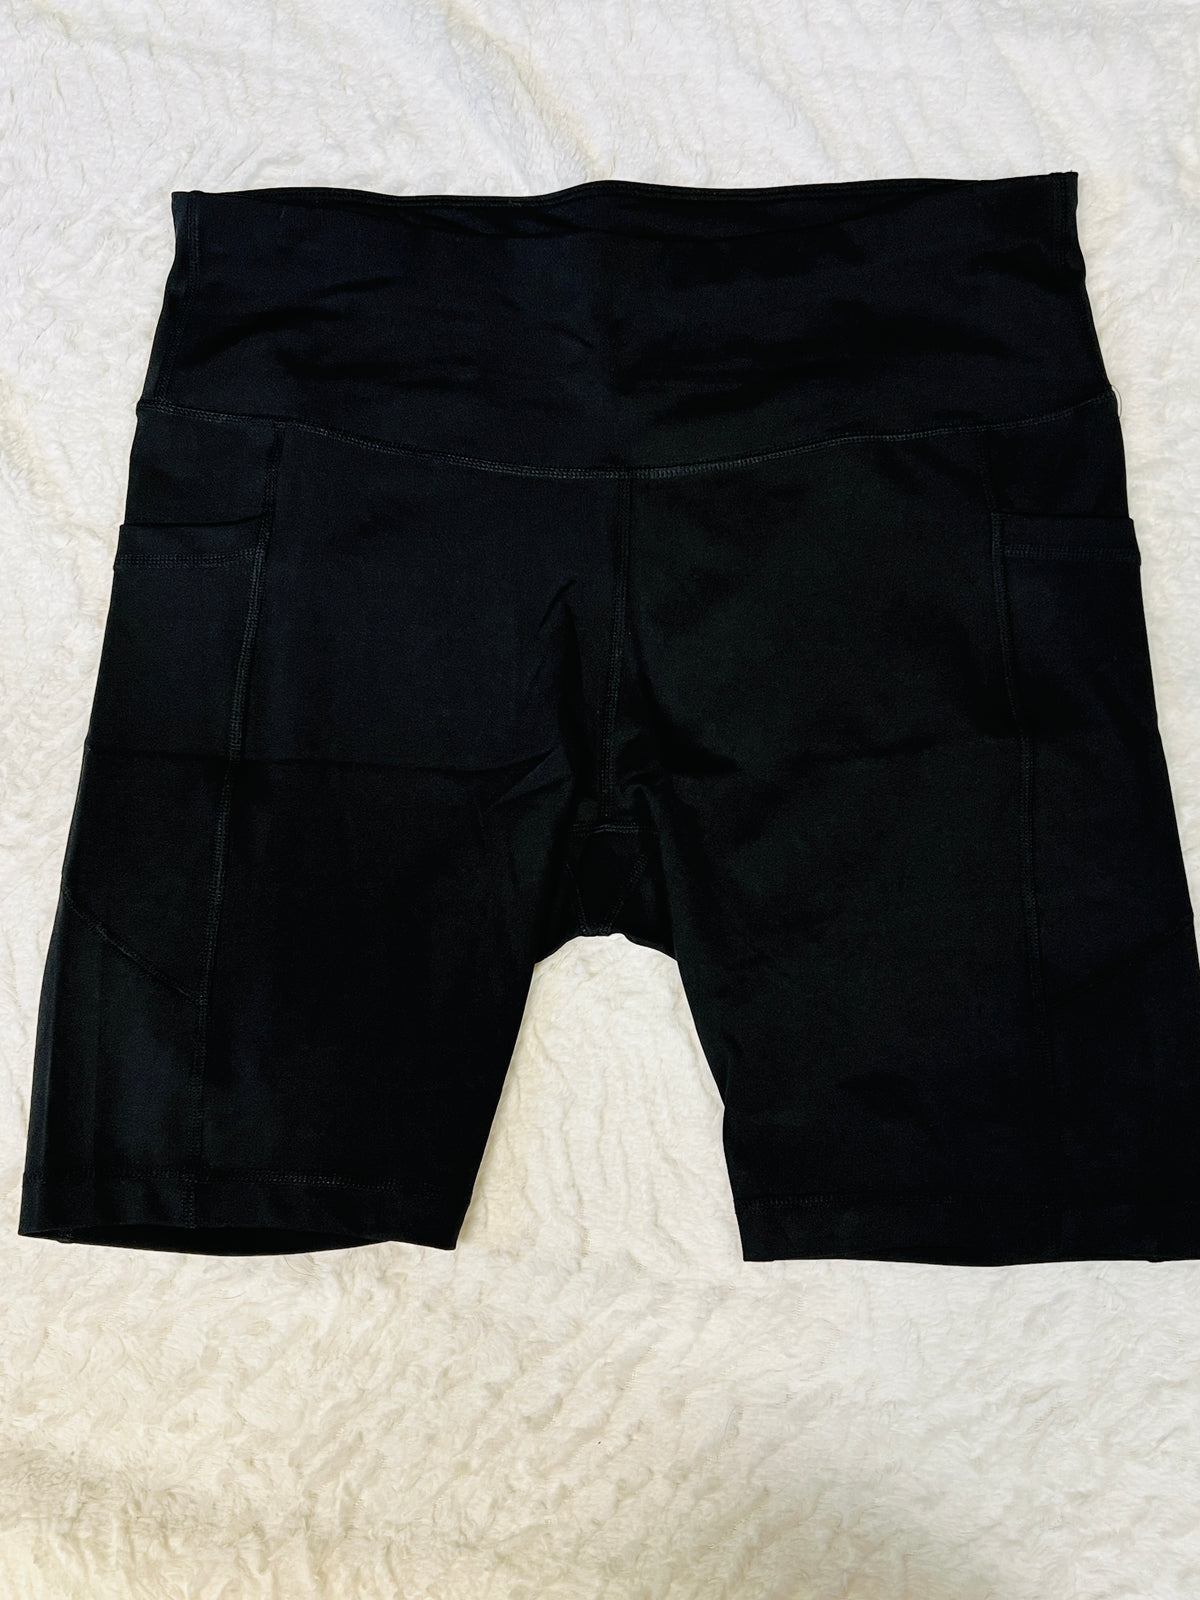 [CURVY] Black Biker Shorts *